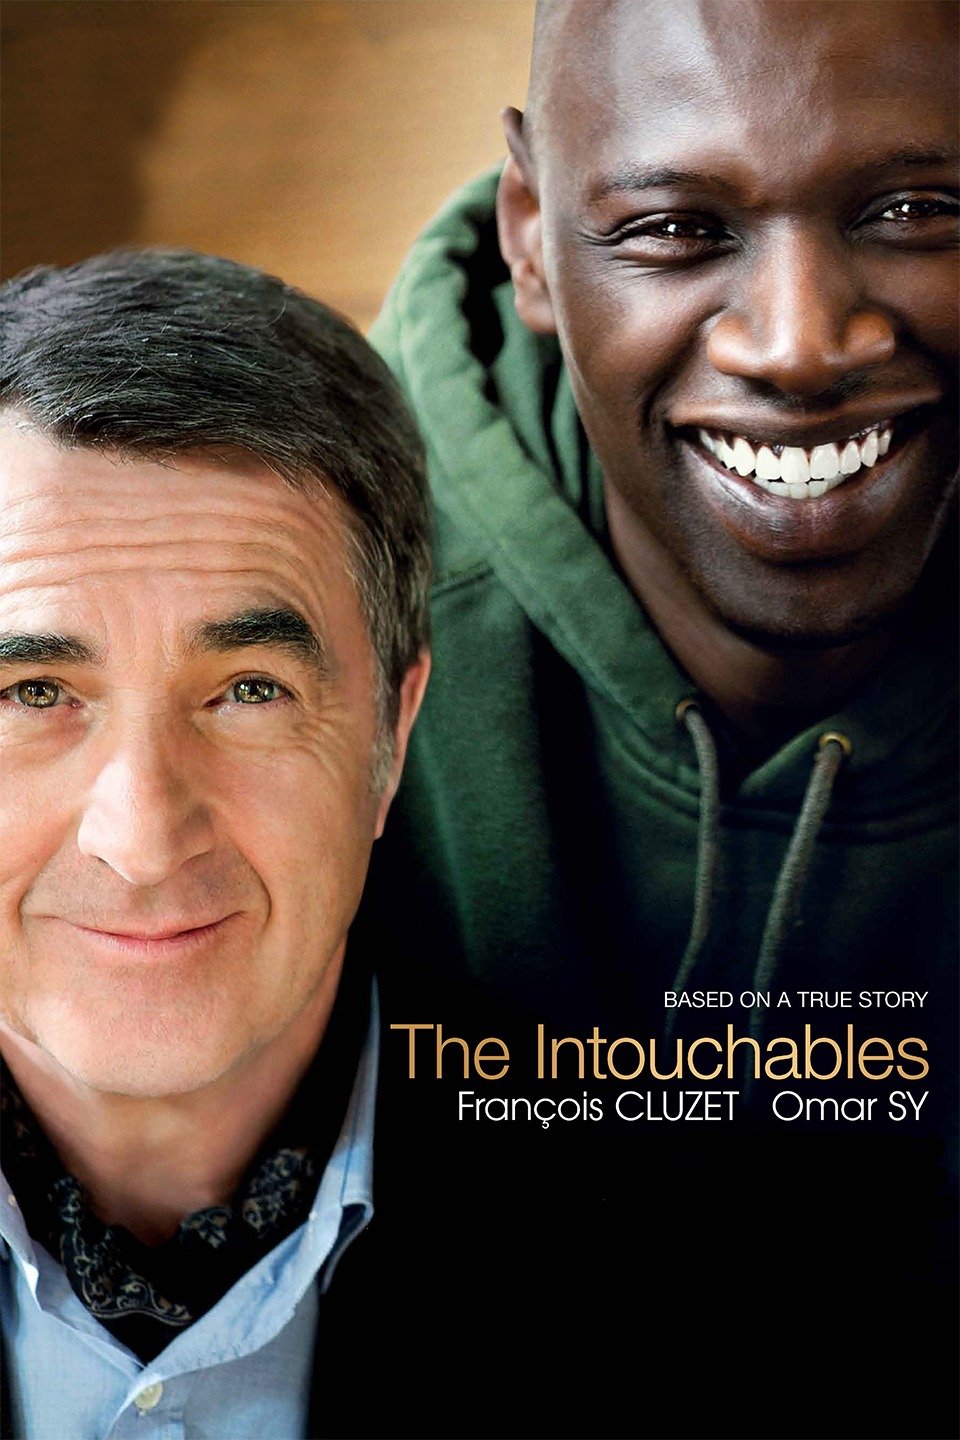 [MINI Super-HQ] The Intouchables (2011) ด้วยใจแห่งมิตร พิชิตทุกสิ่ง [1080p] [พากย์ไทย 5.1 + ฝรั่งเศส DTS] [บรรยายไทย + อังกฤษ] [เสียงไทย + ซับไทย] [ONE2UP]